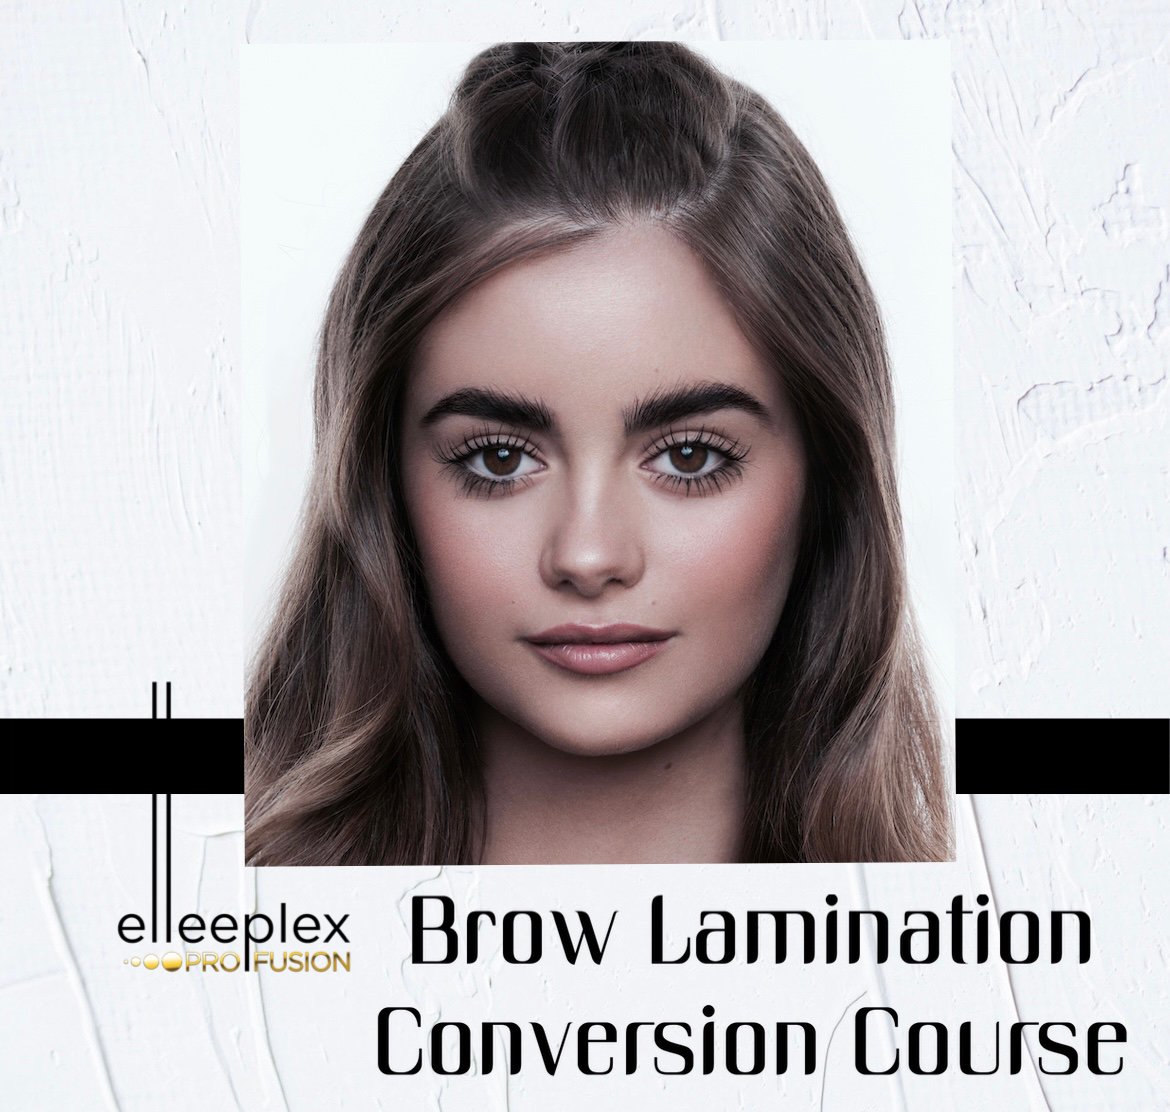 Elleeplex Profusion Brow Lamination Conversion Certification